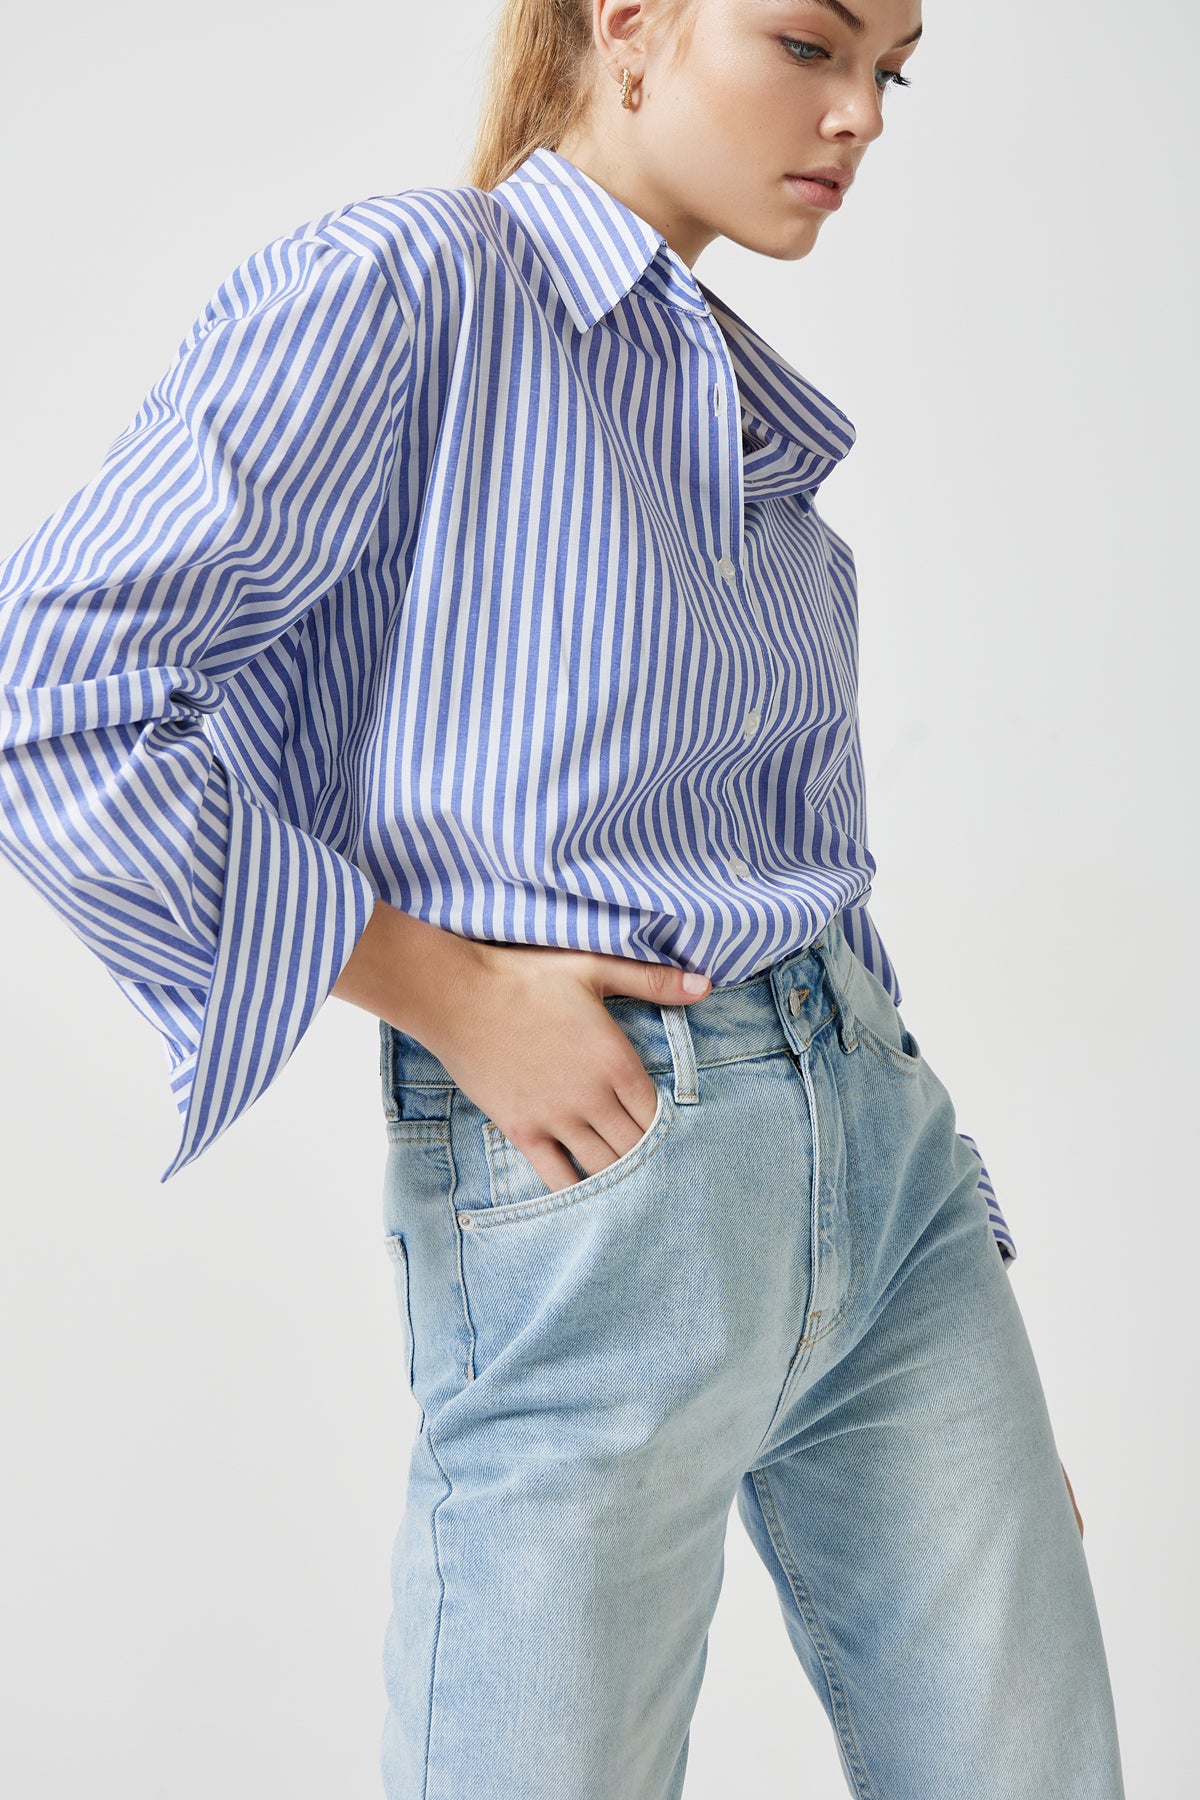 The Shirt - Stripe Blue / White